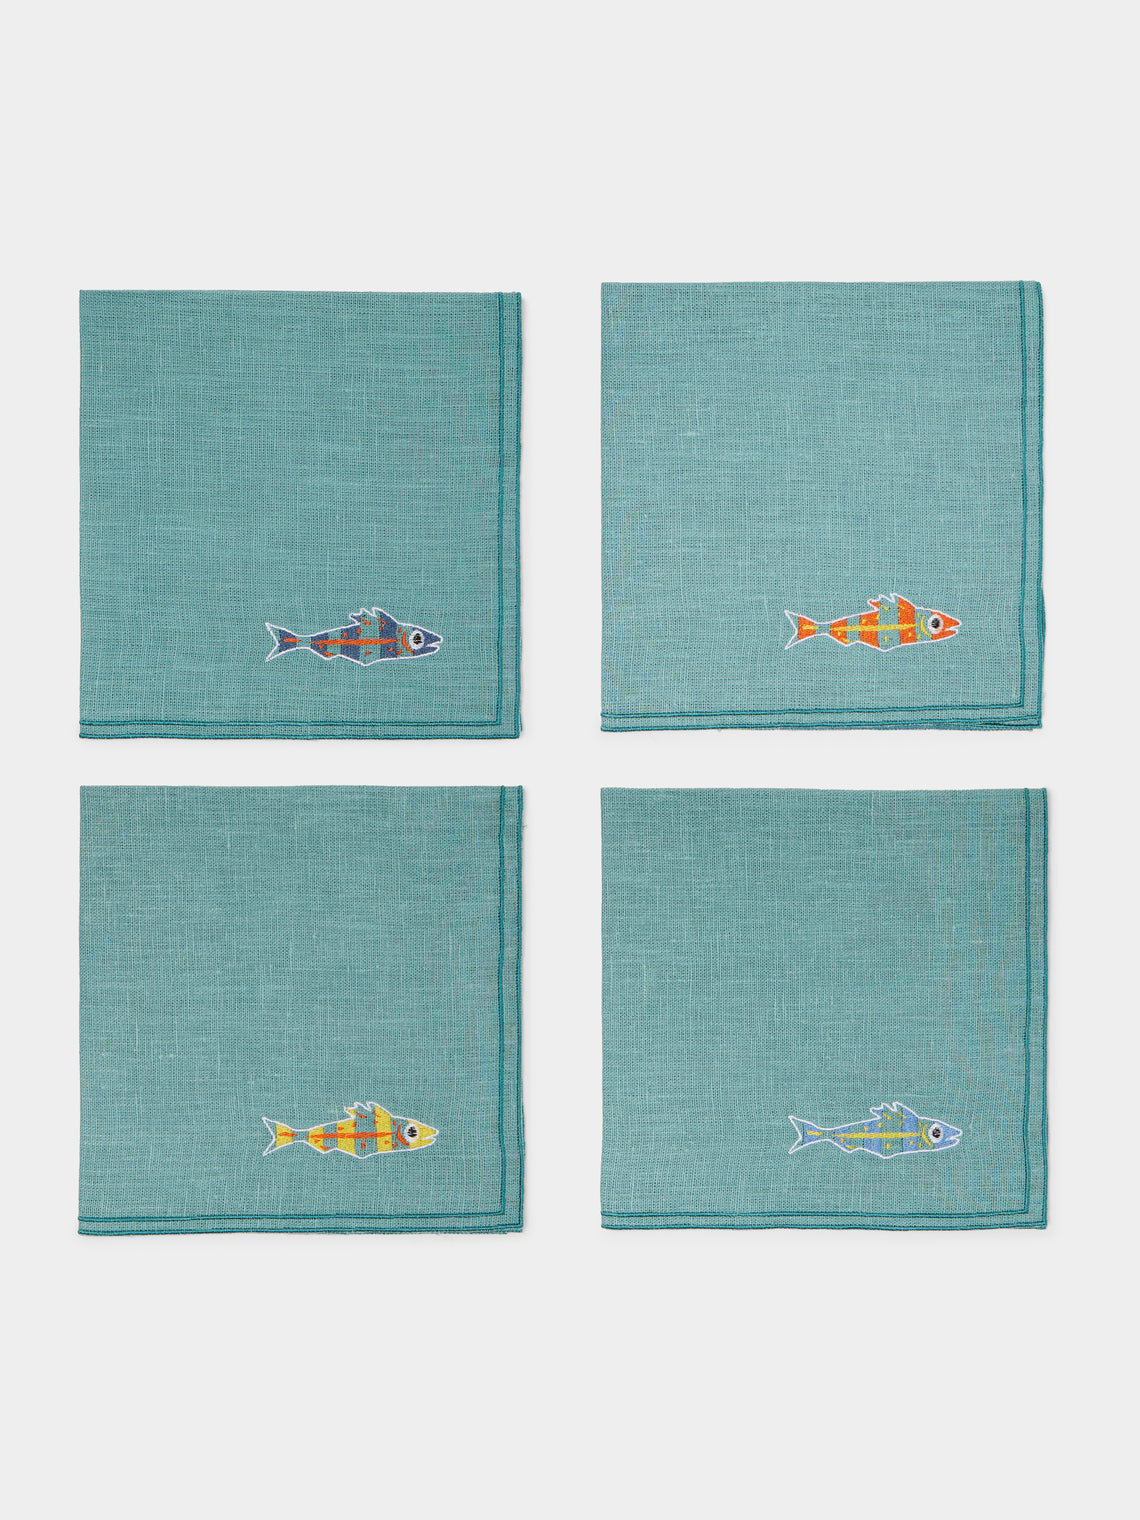 La Gallina Matta - Sardines Embroidered Linen Napkins (Set of 4) -  - ABASK - 